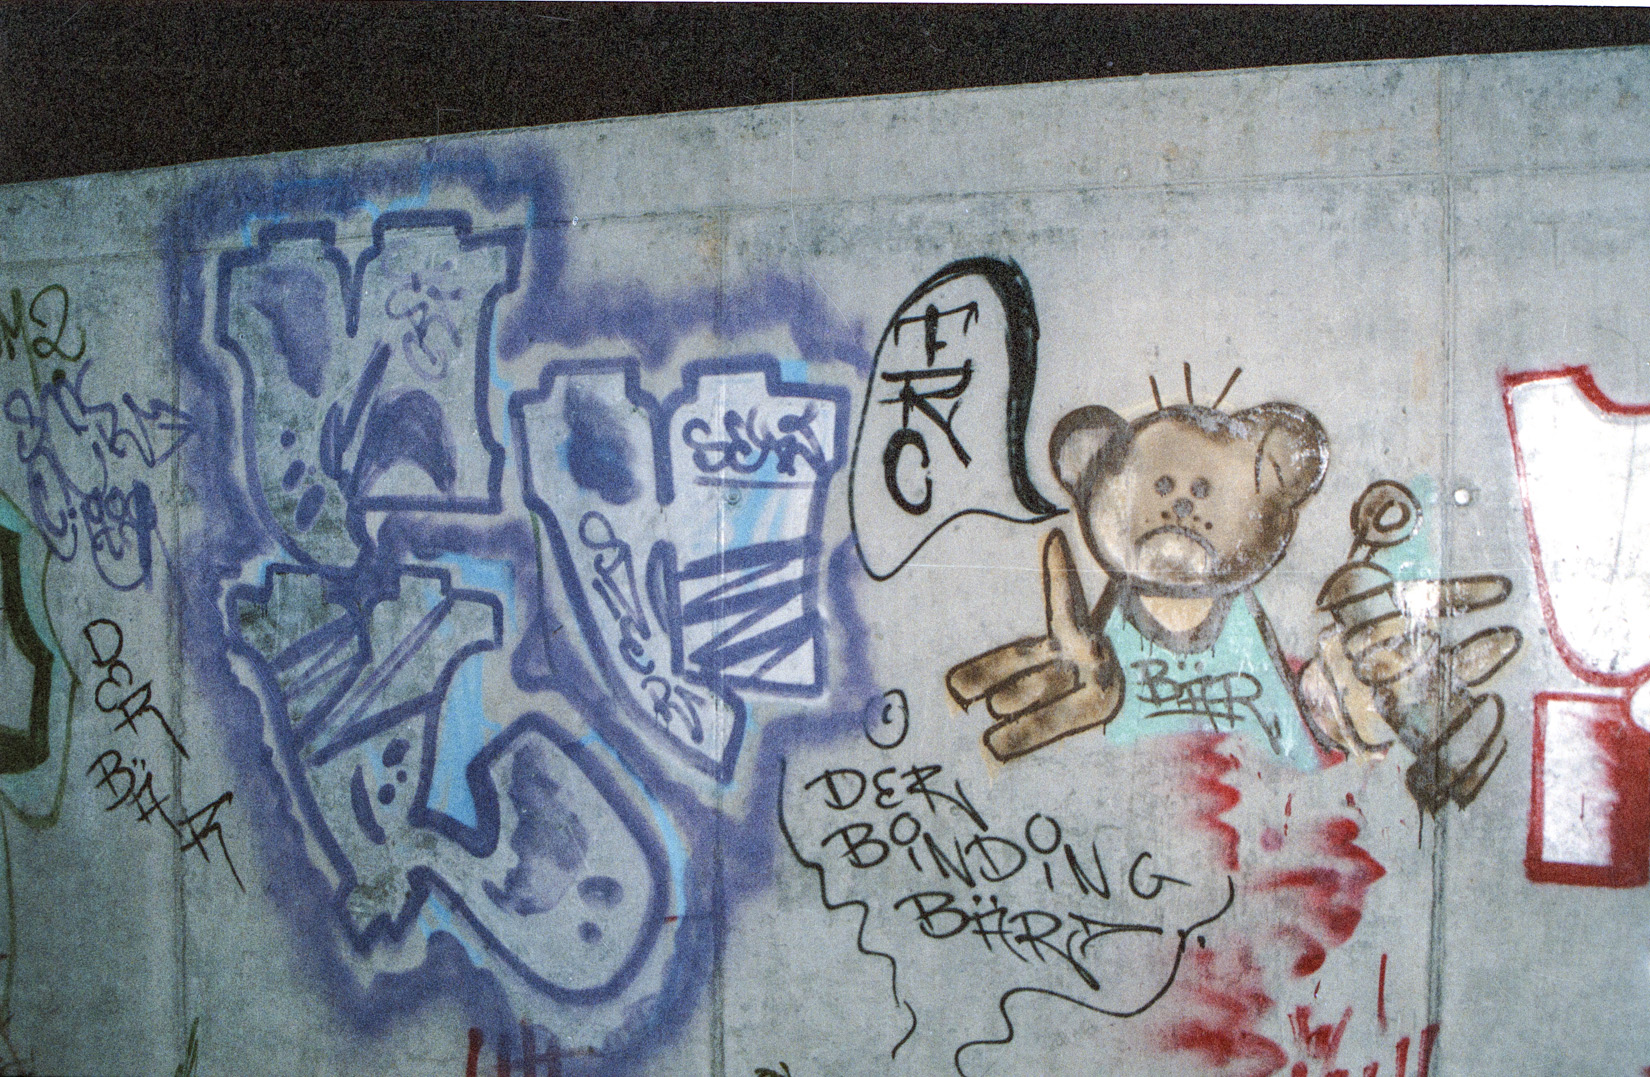 Frankfurt_Graffiti_1988_1989_H88_FRC (22 von 25)